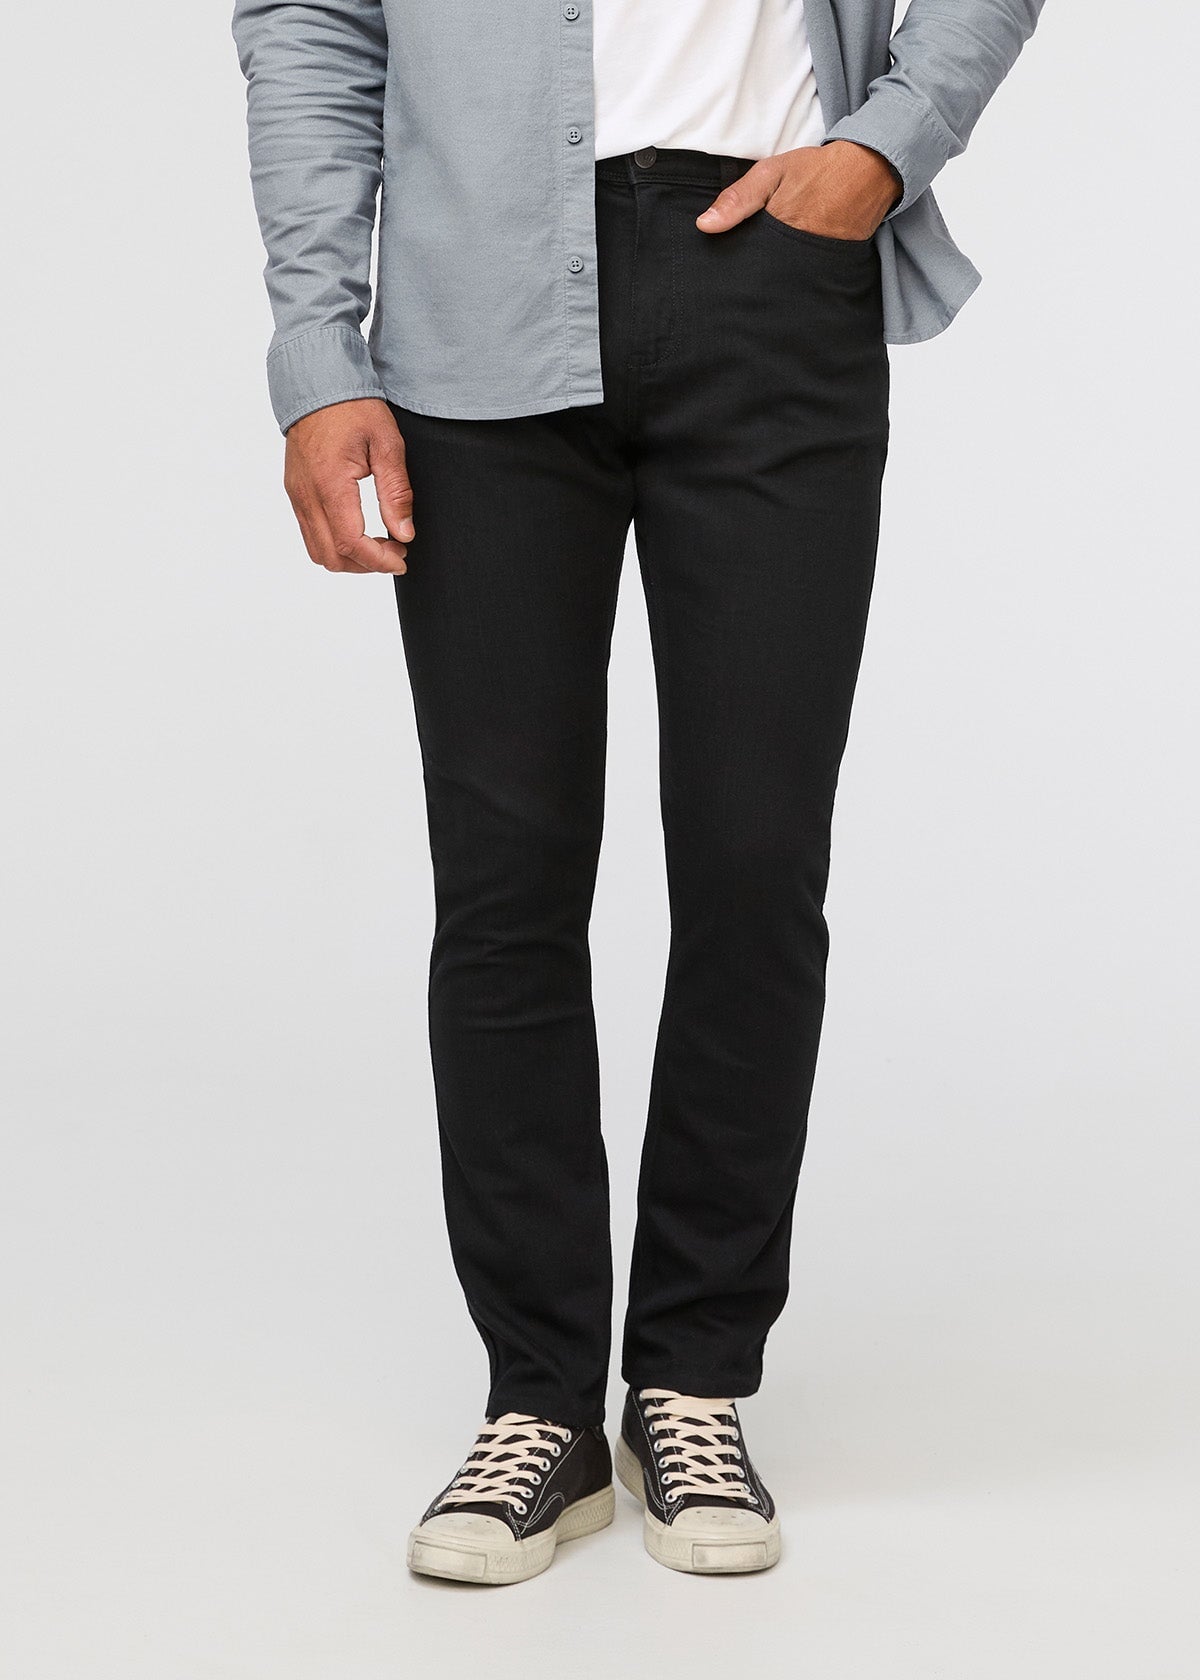 New Wrangler Slim Fit Denim Shirt Black Denim Color Men's Sizes S-3XL  Premium | eBay